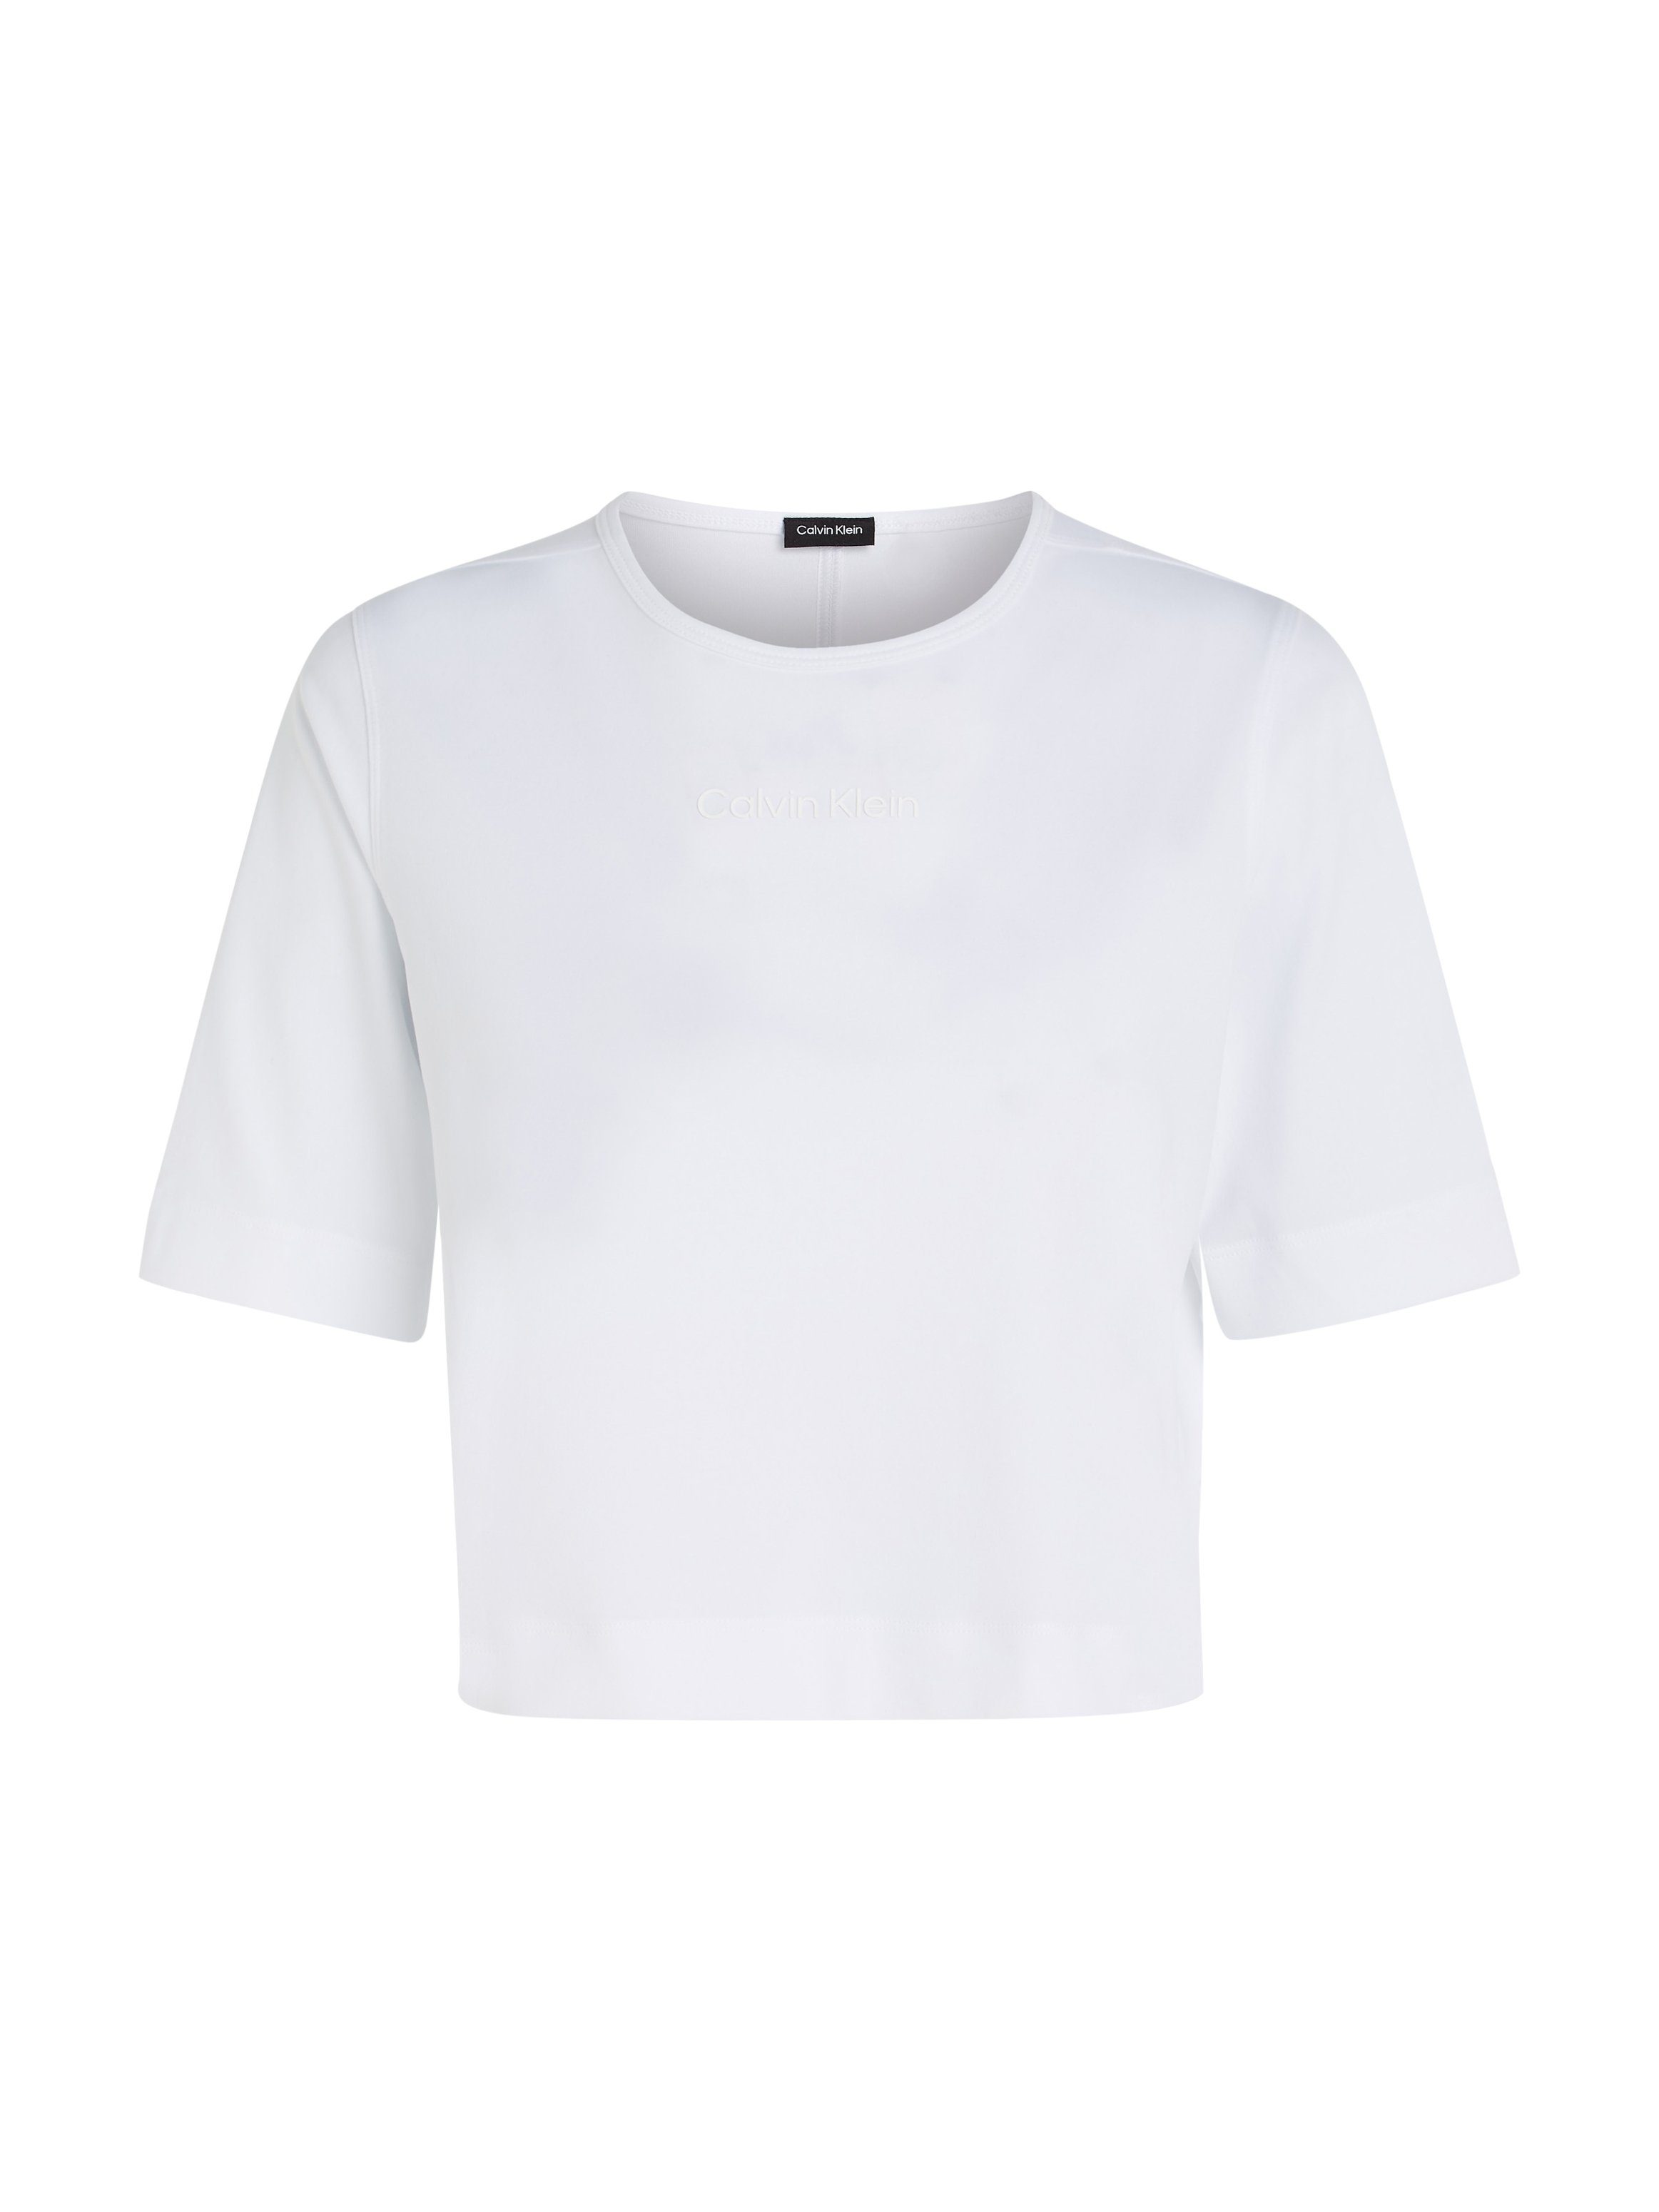 Calvin Klein Sport T-Shirt White Bright